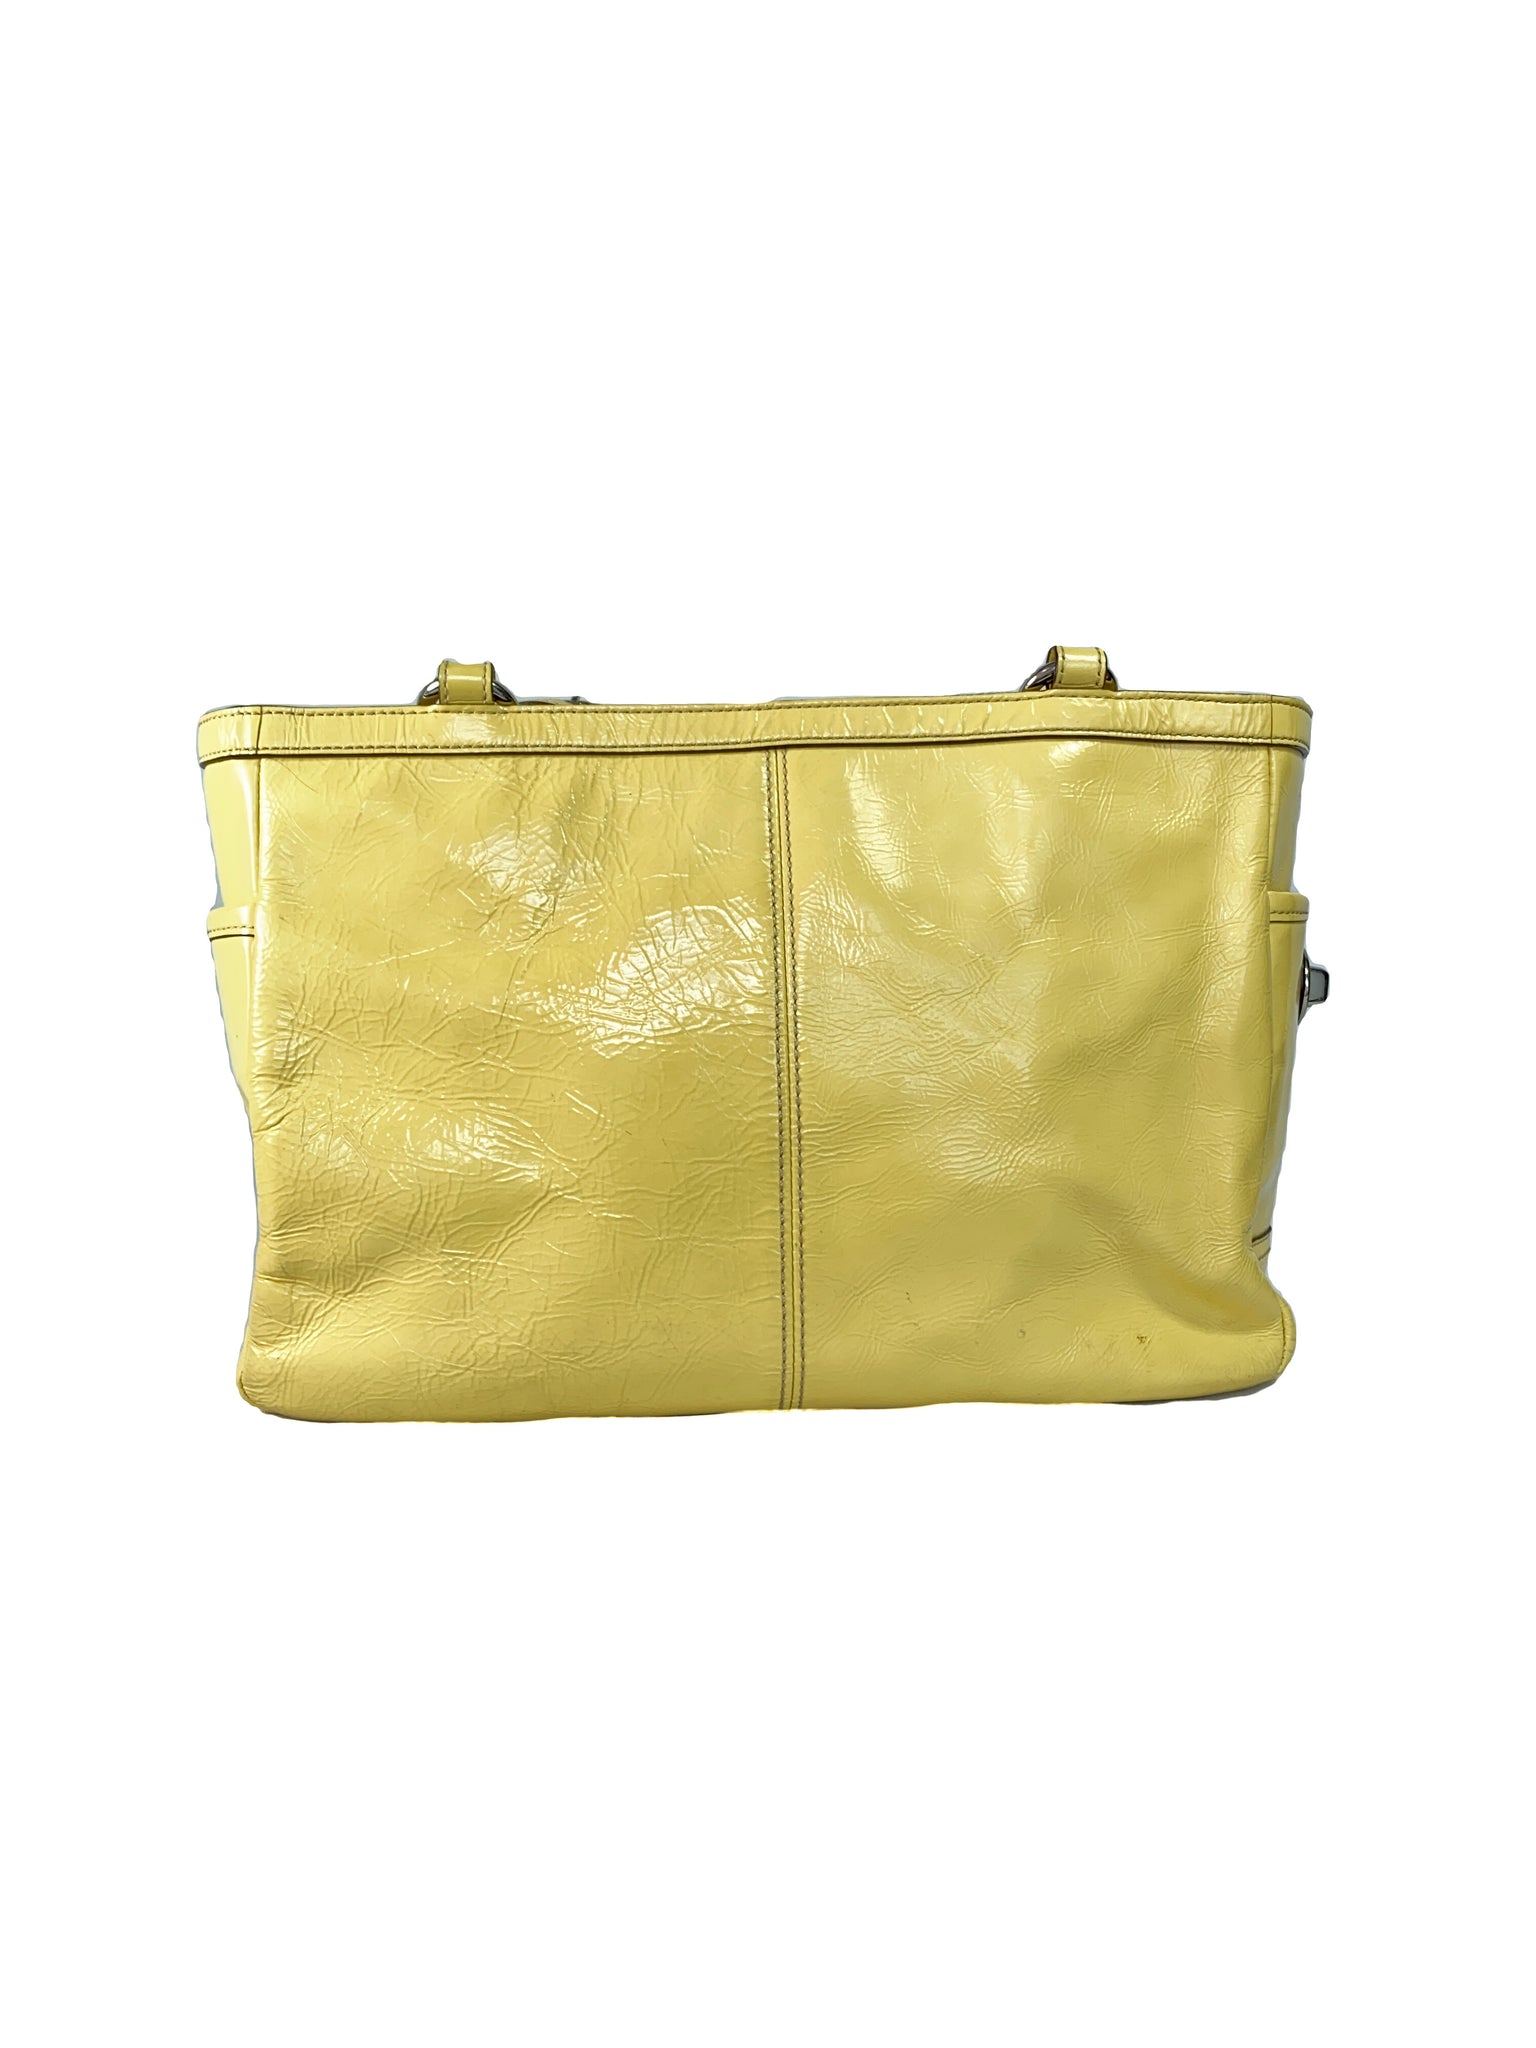 Coach purse. Sunflower yellow. Original tag... - Depop